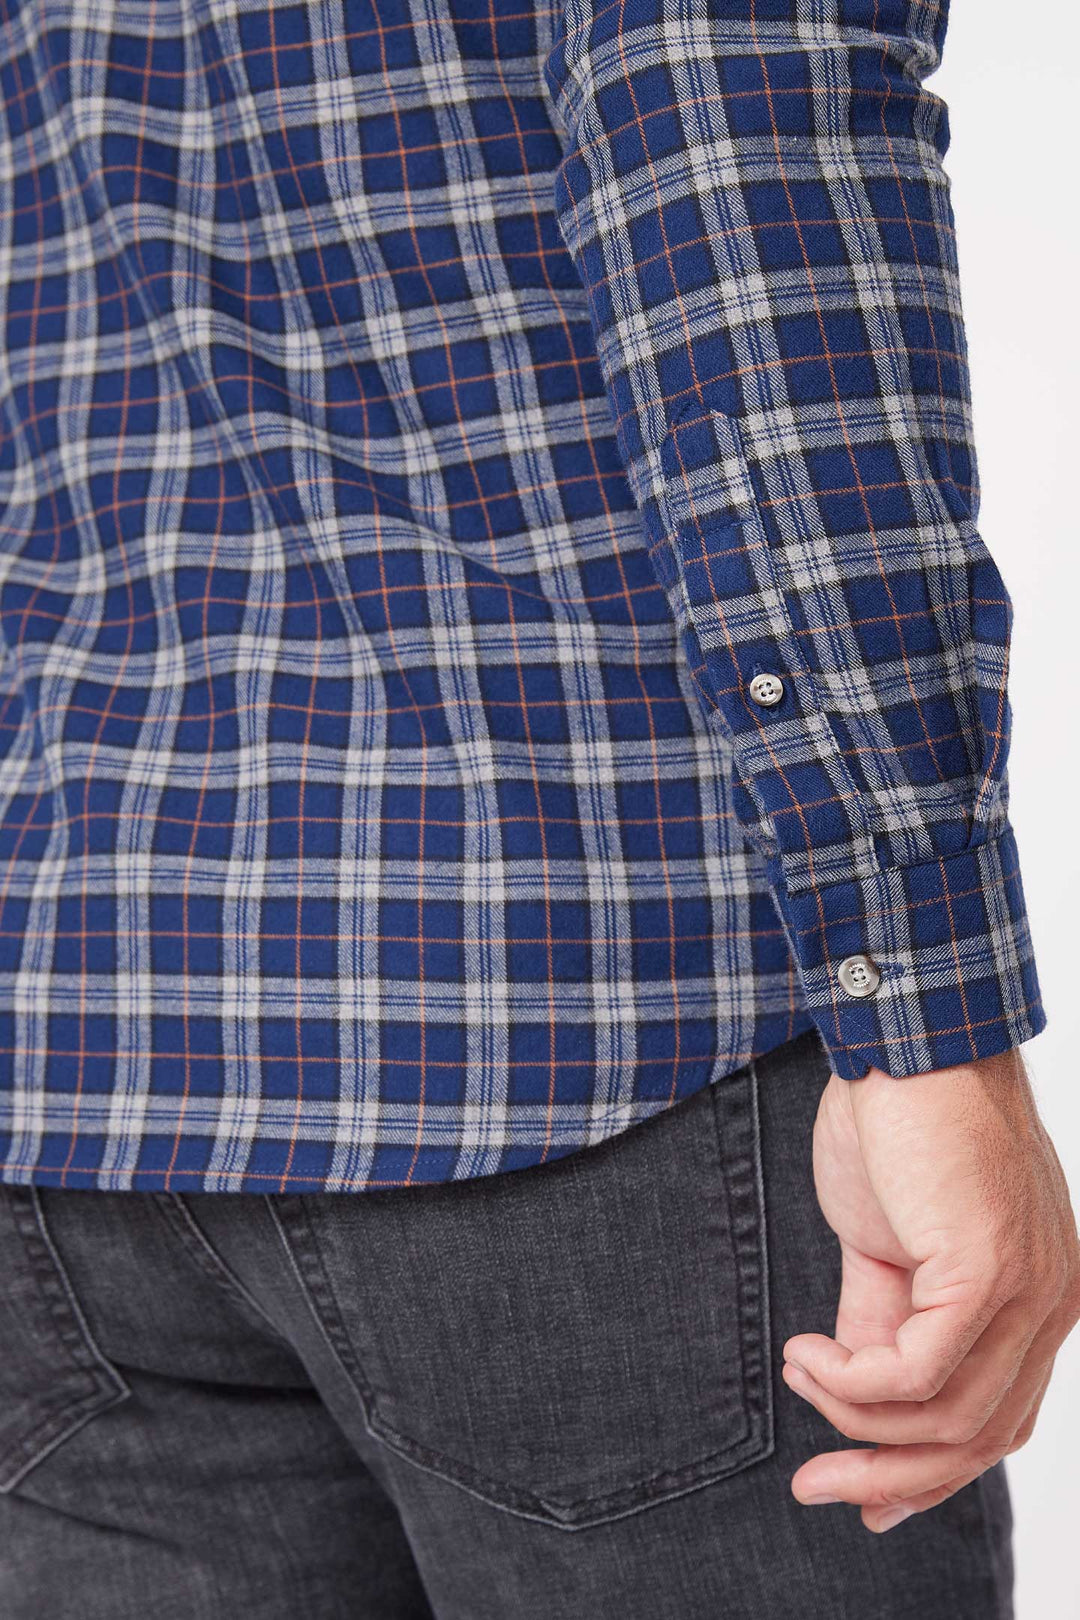 Buy Ozark Plaid Flannel Button-Down Shirt for Short Men | Ash & Erie   Flannel Everyday Shirt